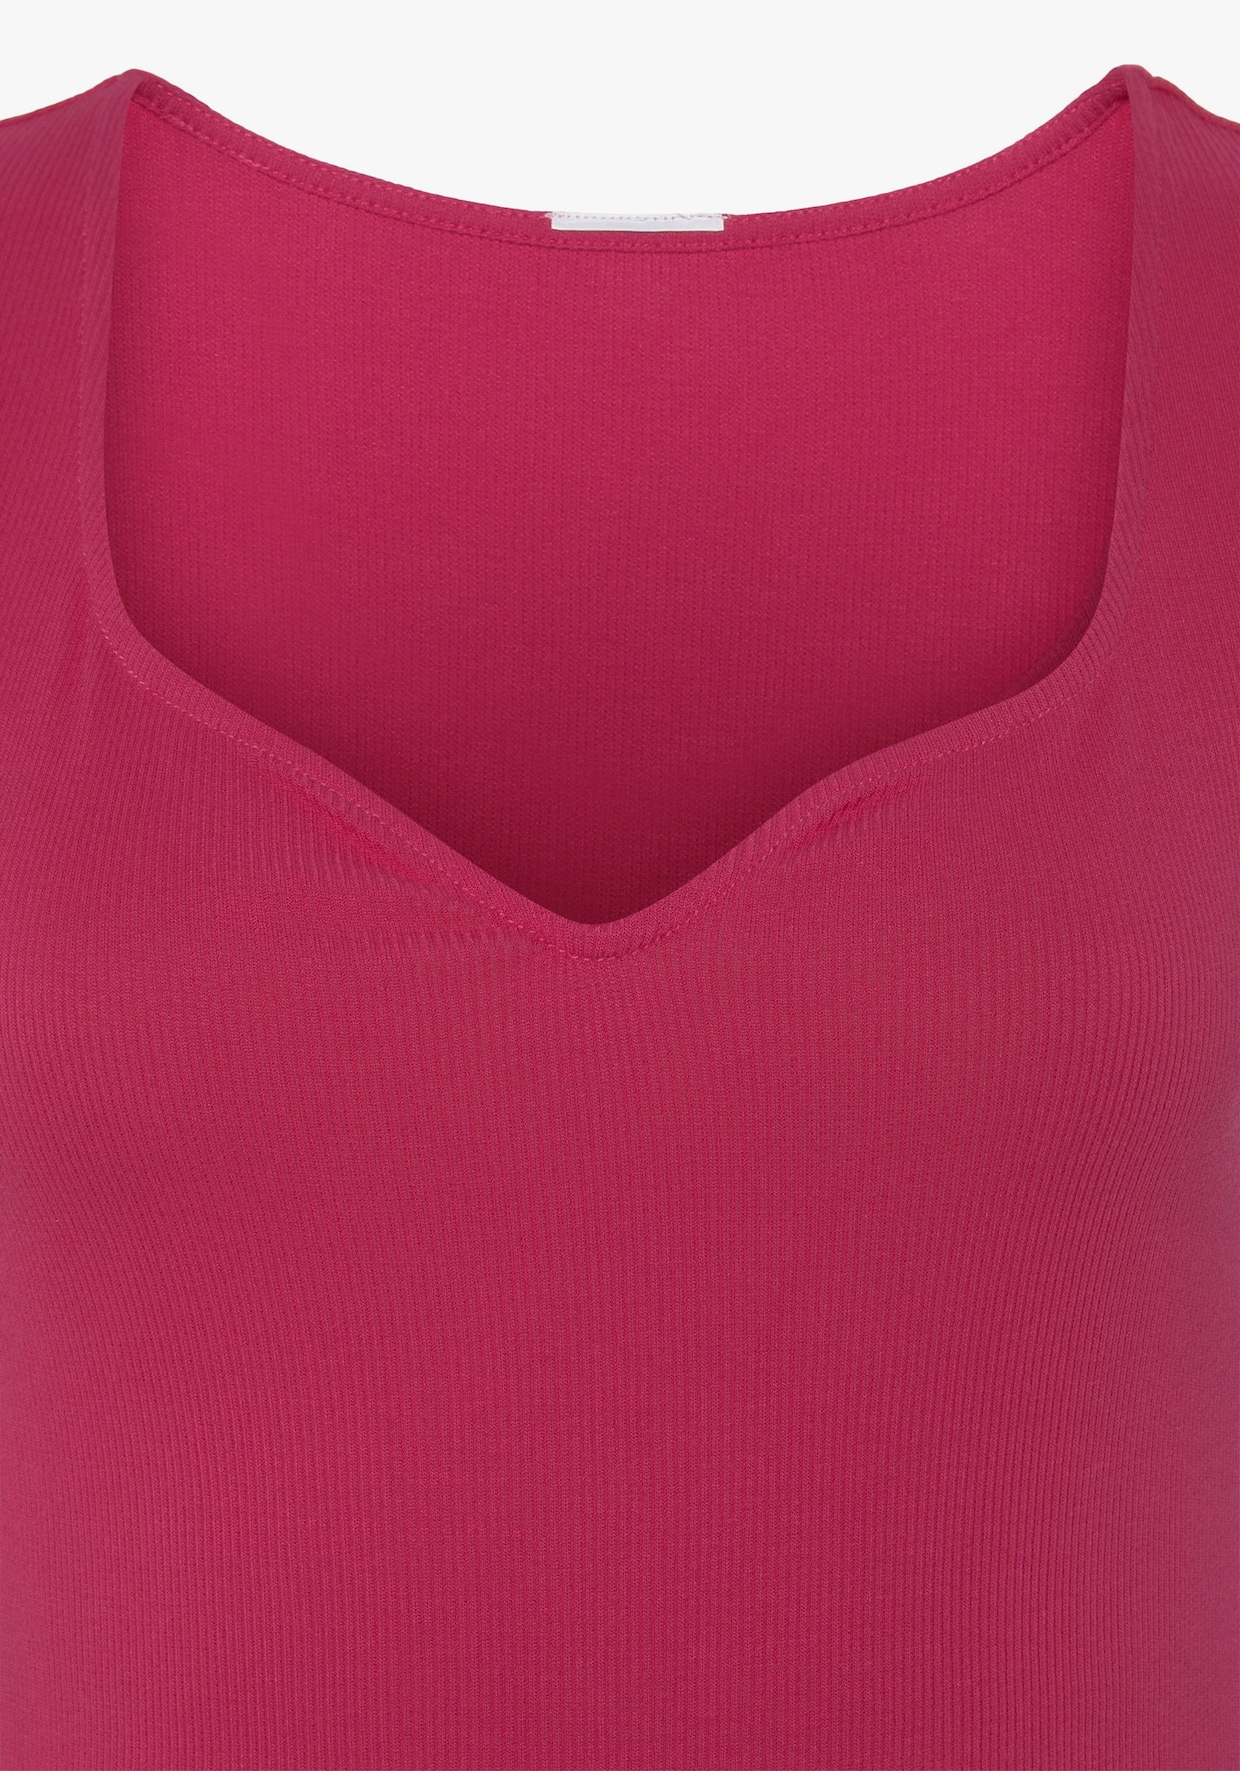 Vivance Shirttop - pink, blau